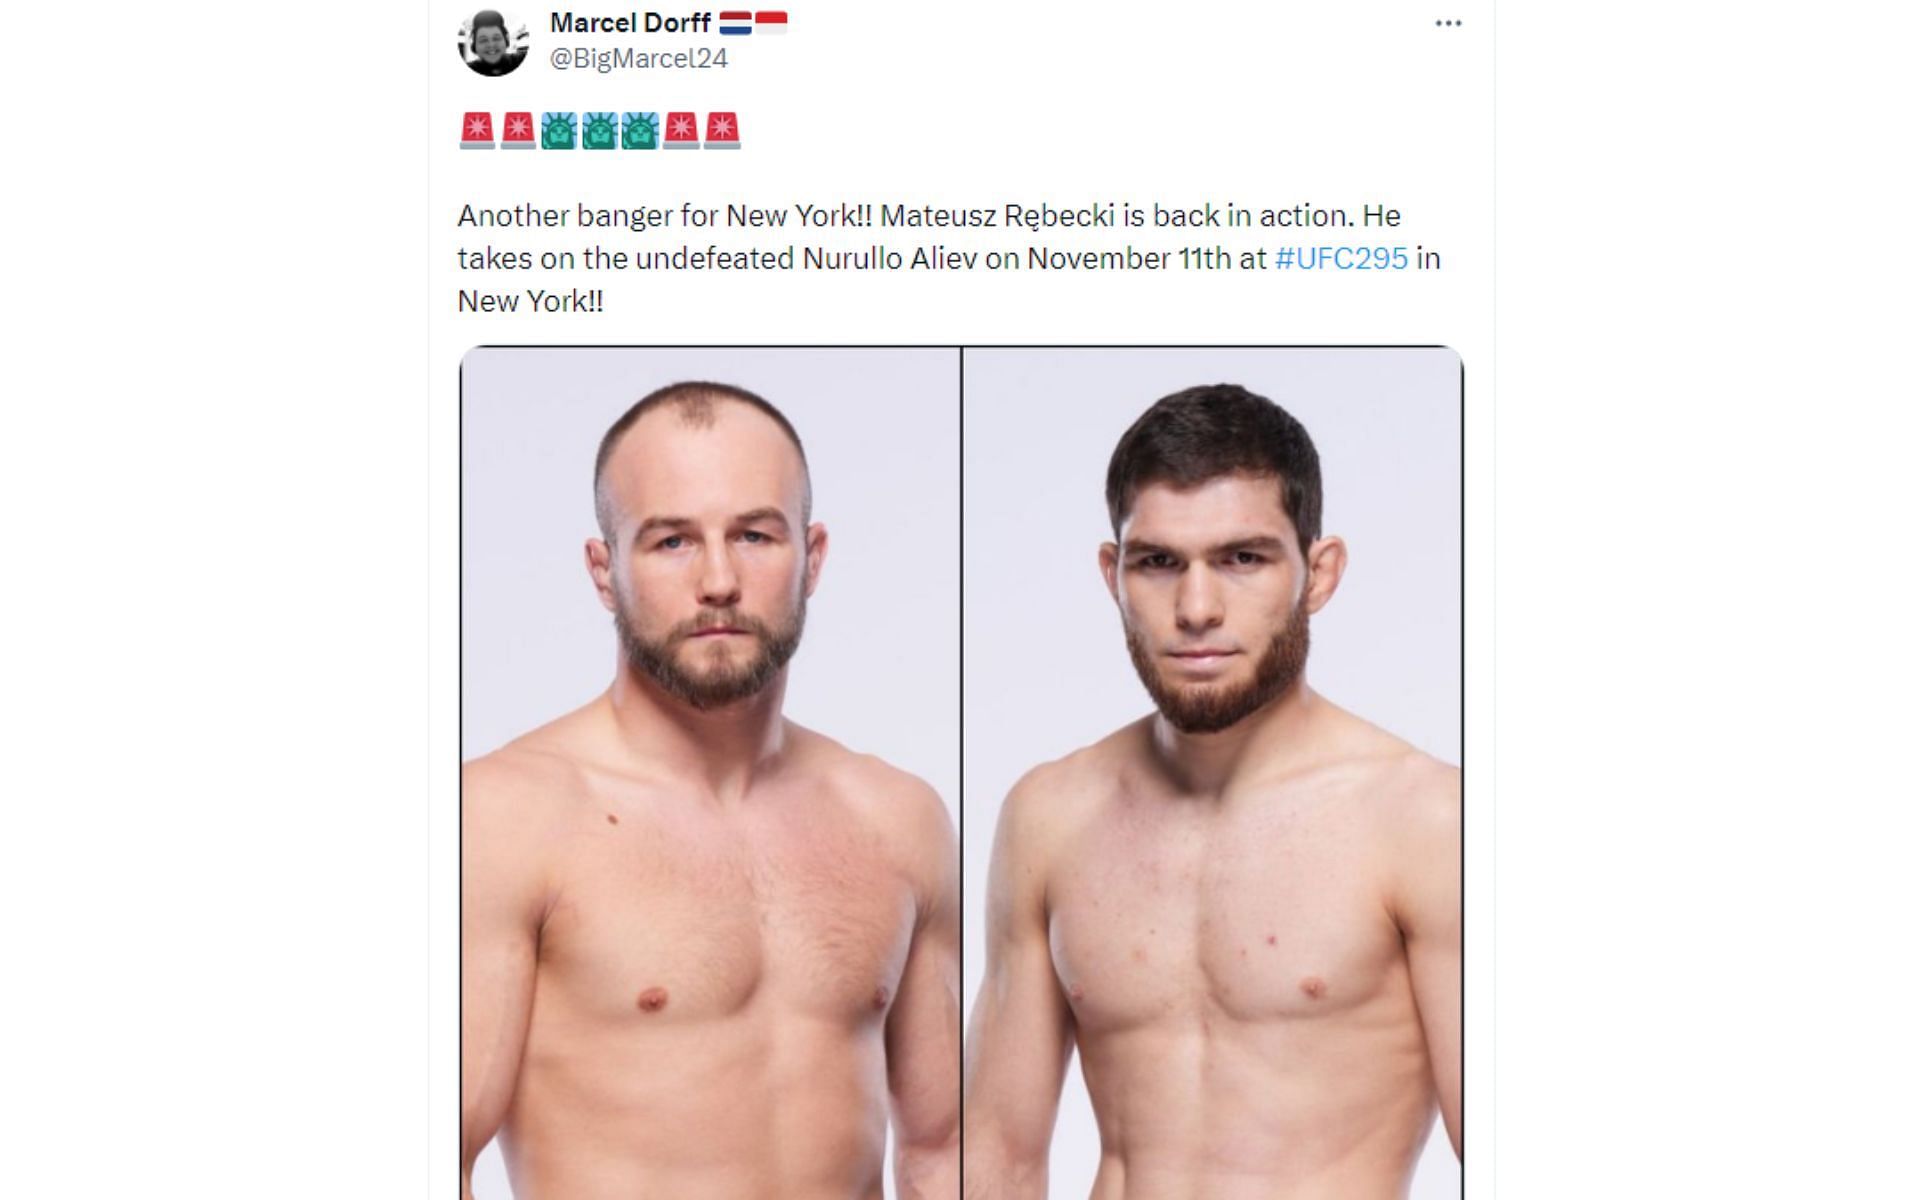 Marcel Dorff tweet regarding the lightweight bout